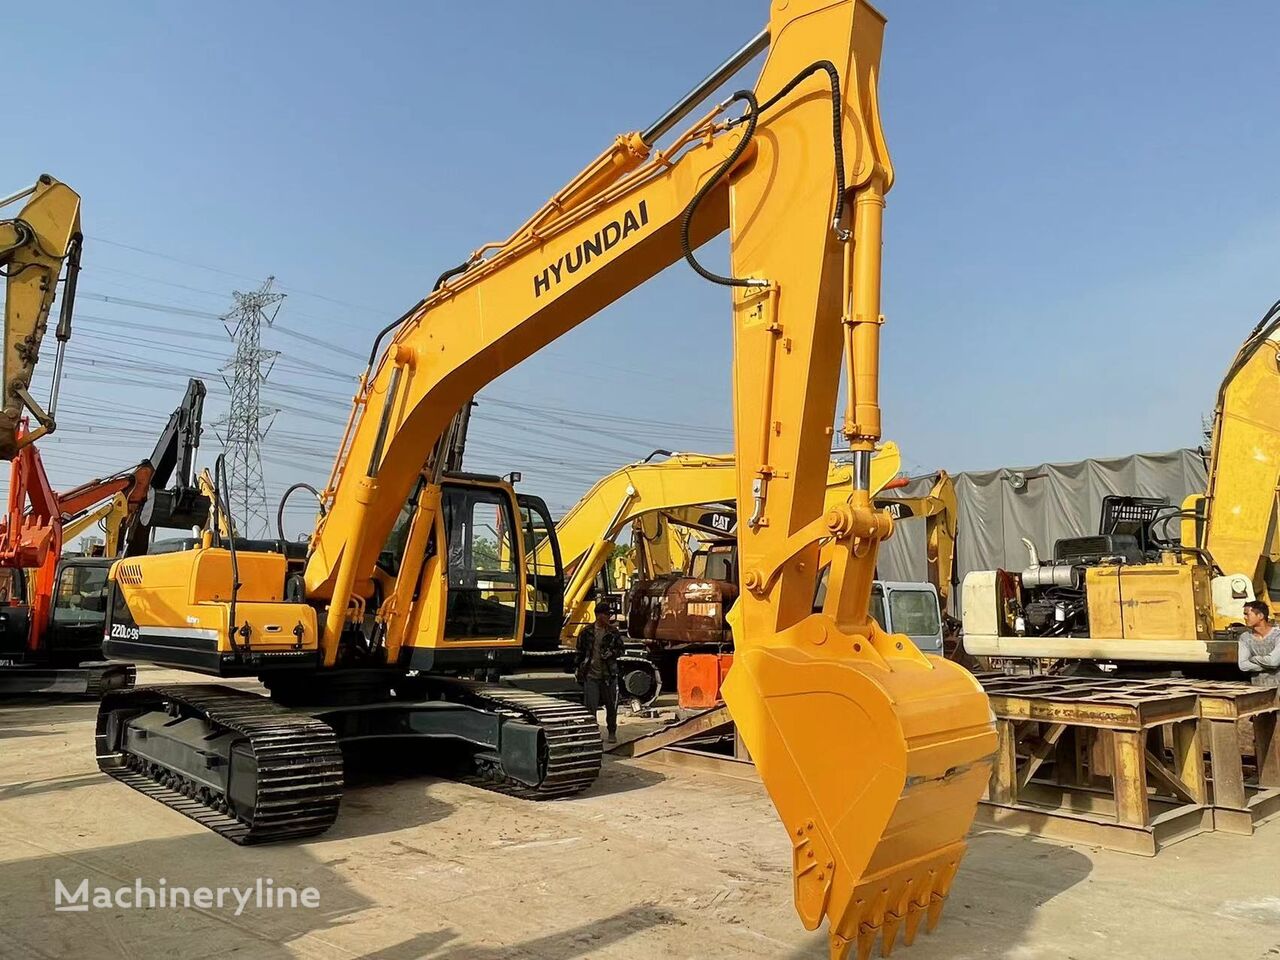 Hyundai R220-9 tracked excavator